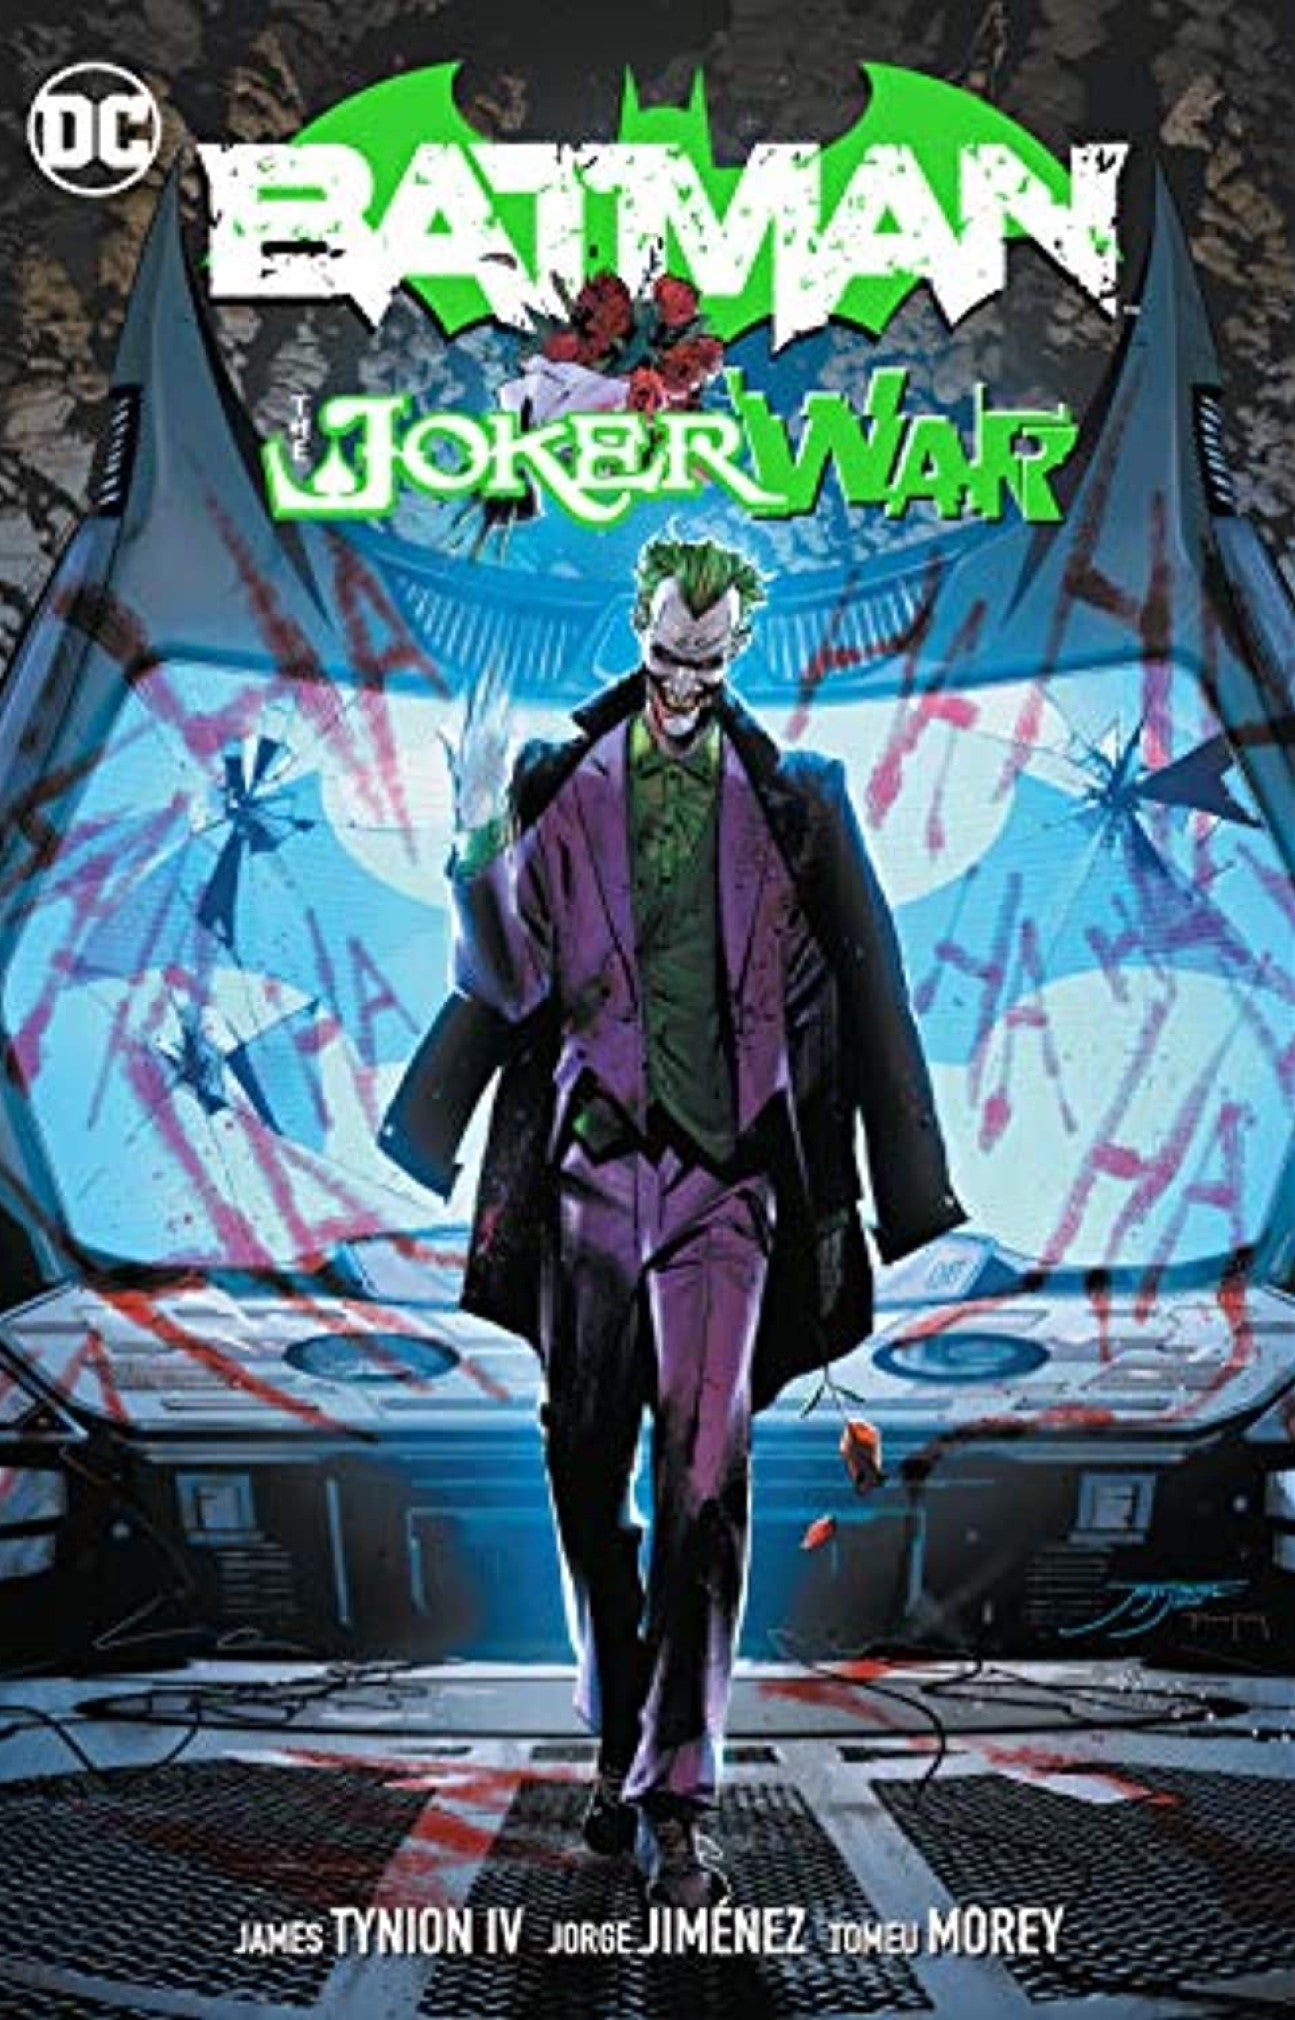 Batman Volume 2 The Joker War - The Comic Warehouse